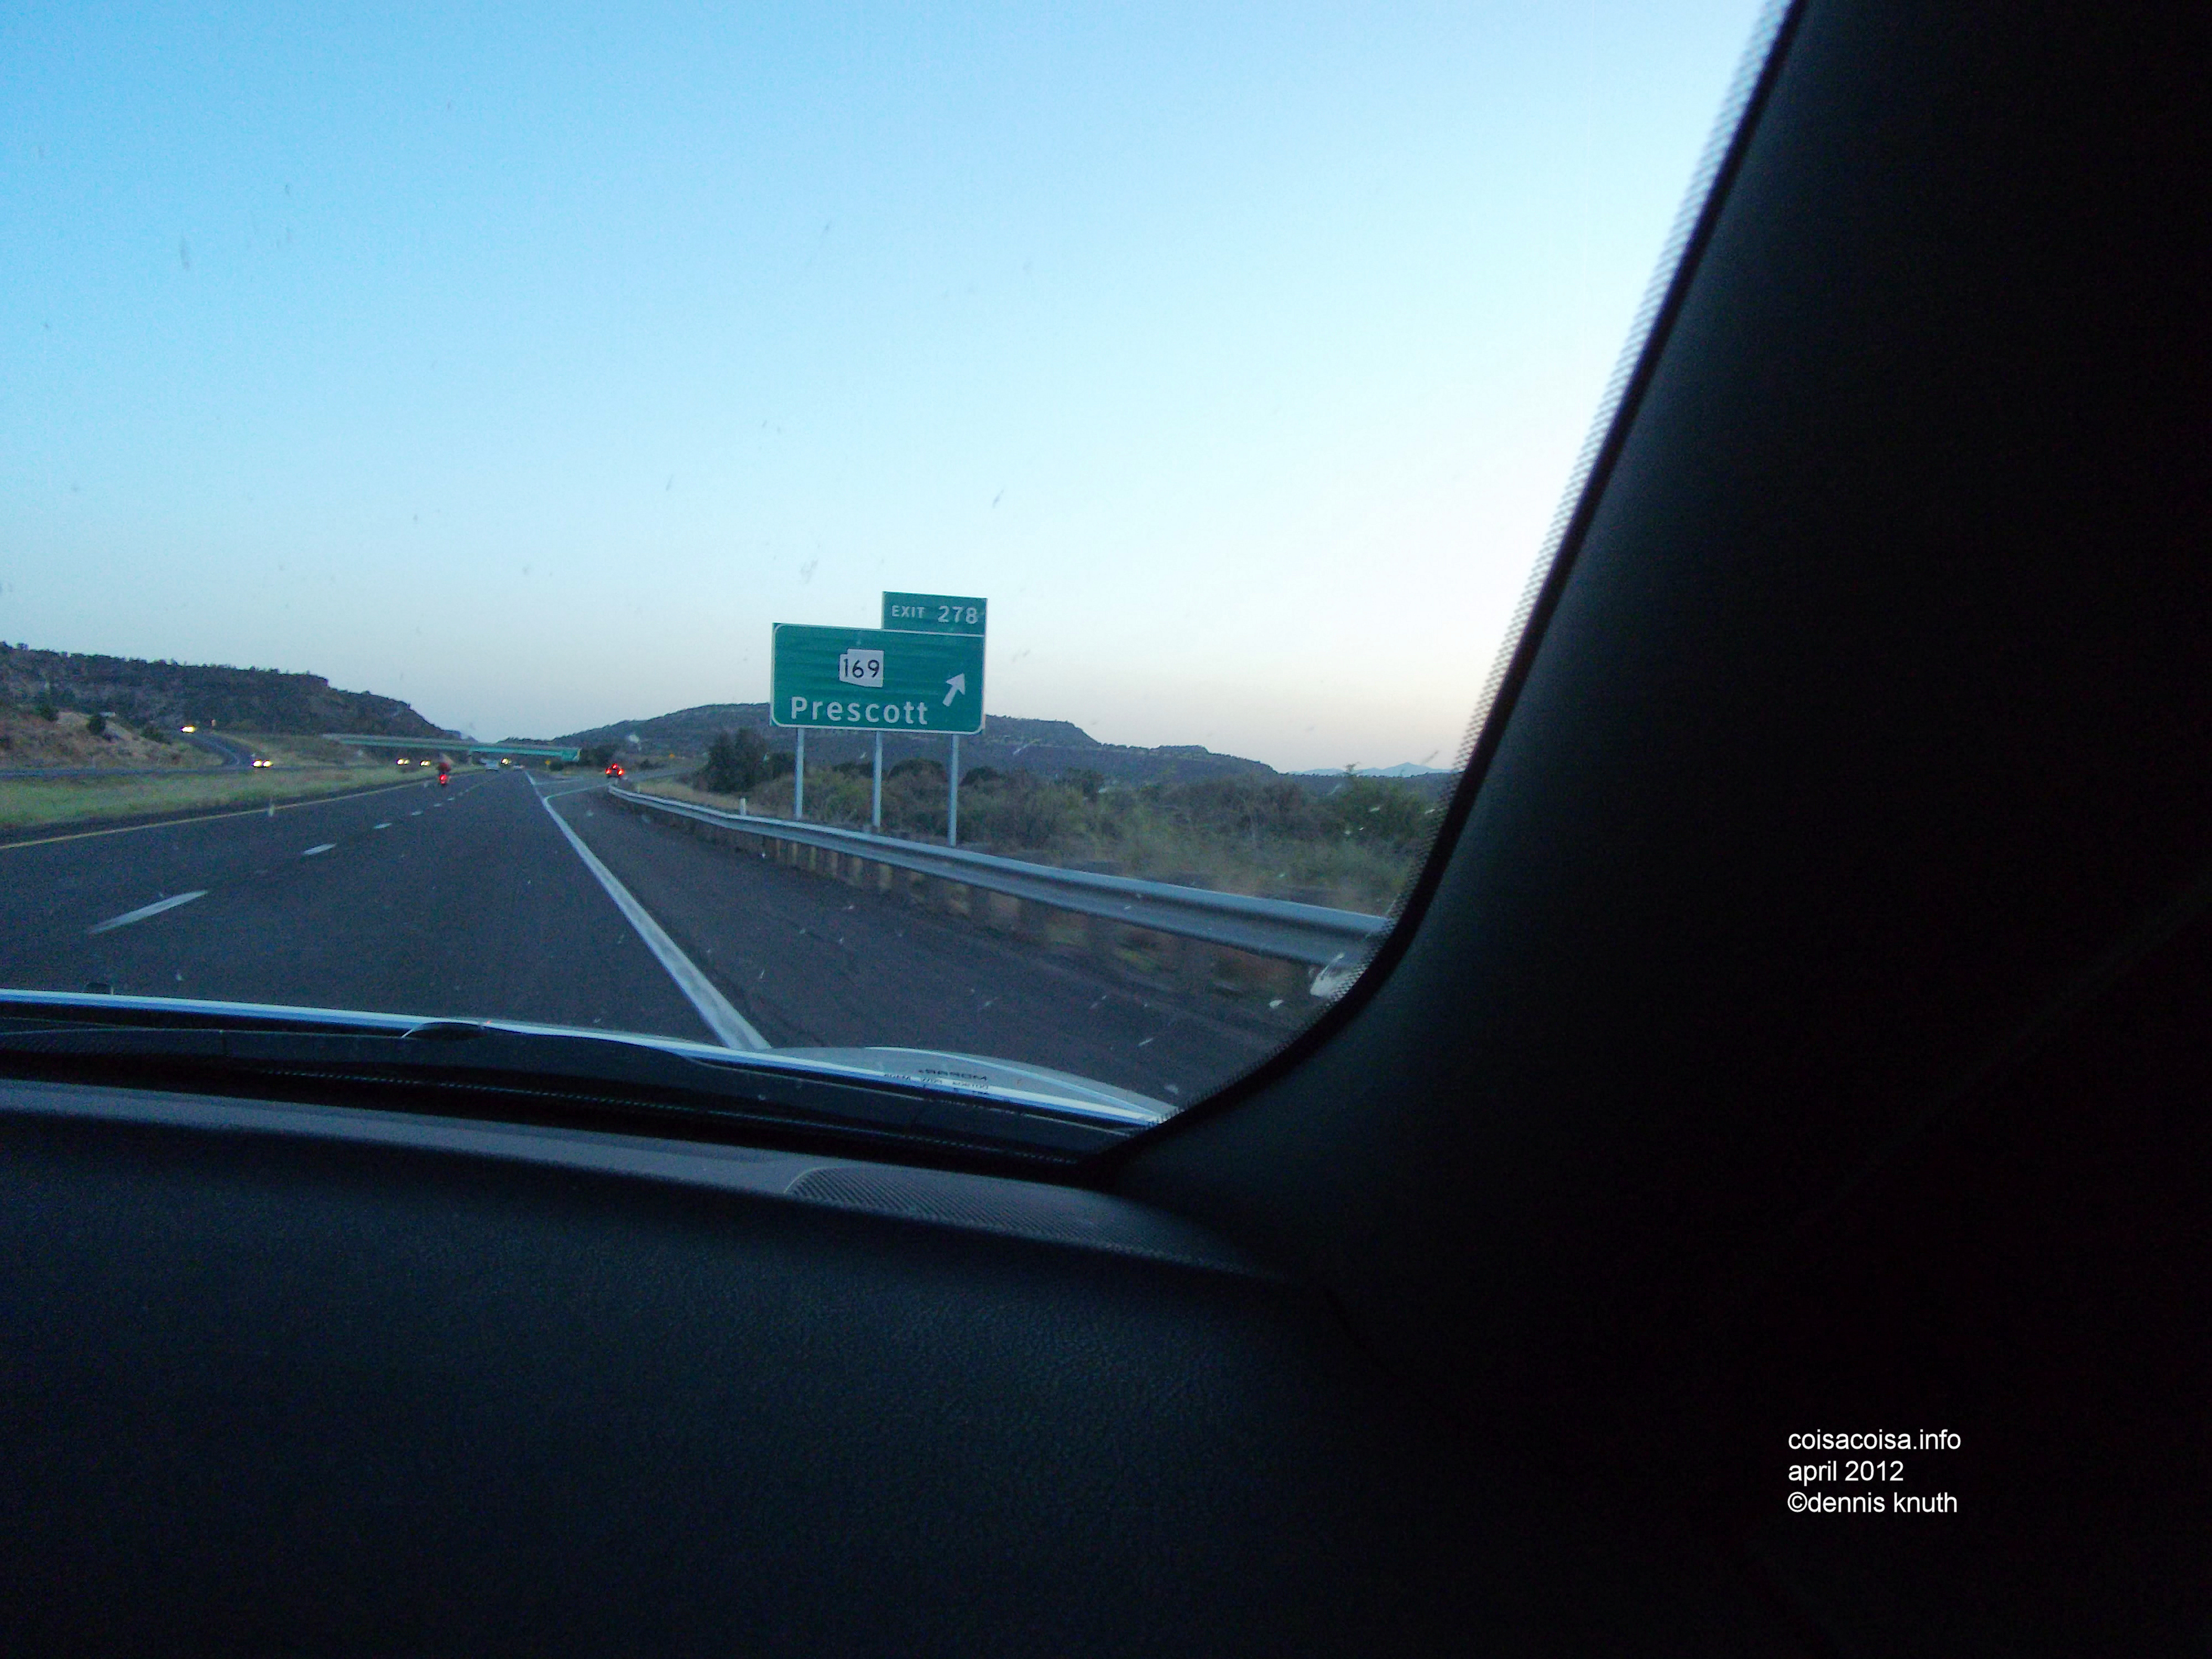 Prescott exit on I-17 to Arizona Highway 169